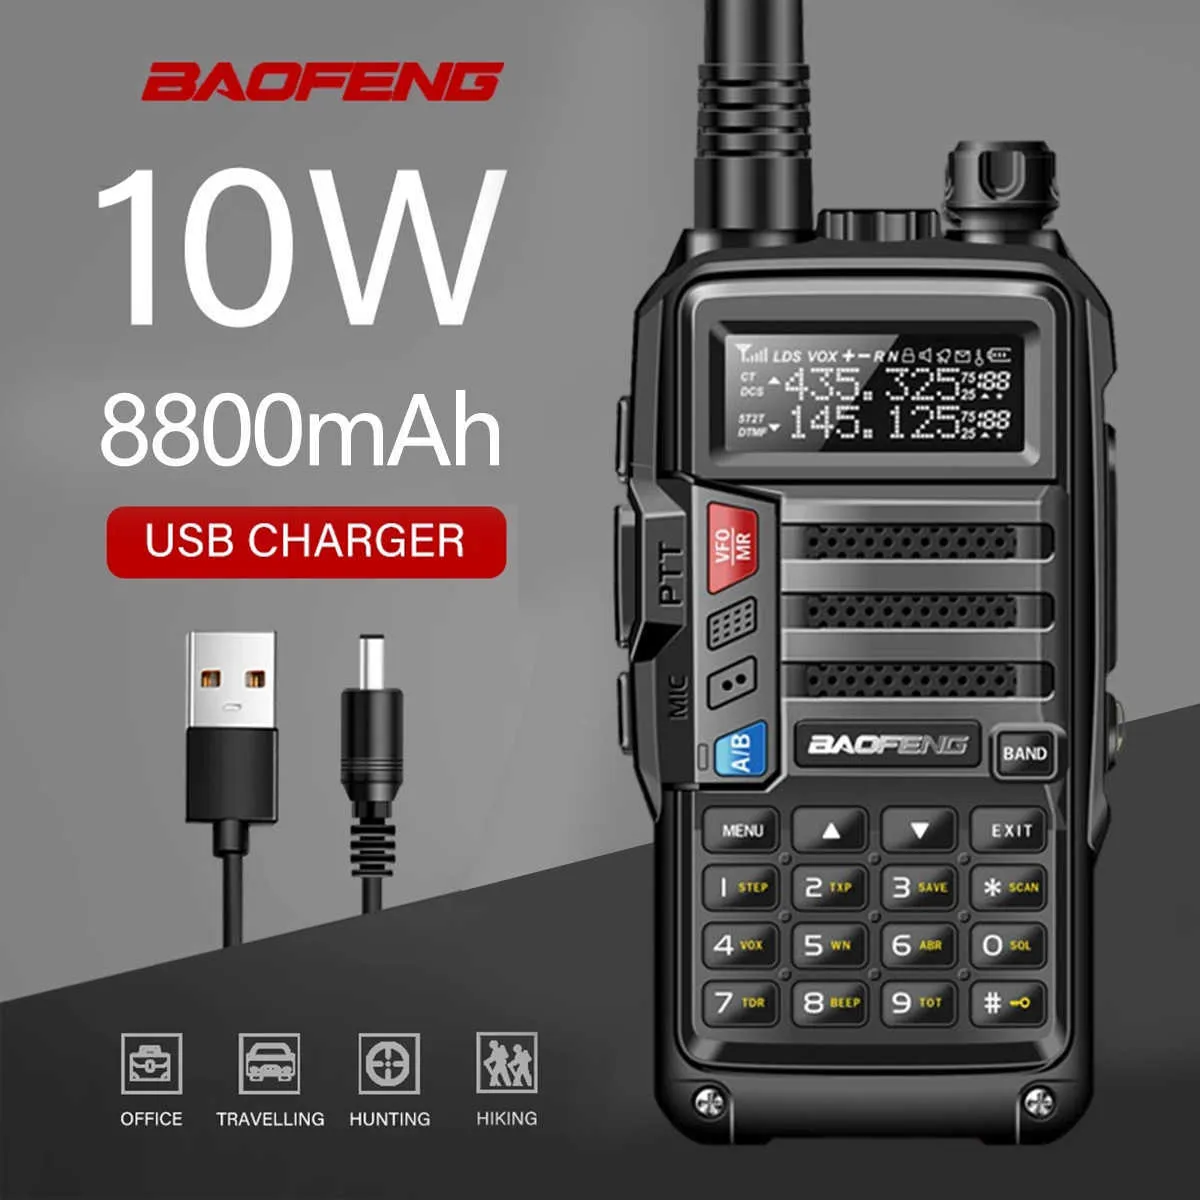 Baofeng UV-5R Plus Walkie Talkie Long Range 10W Tri-band Portable Radio för jakt 30 km uppgradering av UV-10R Dual Band UHF VHF